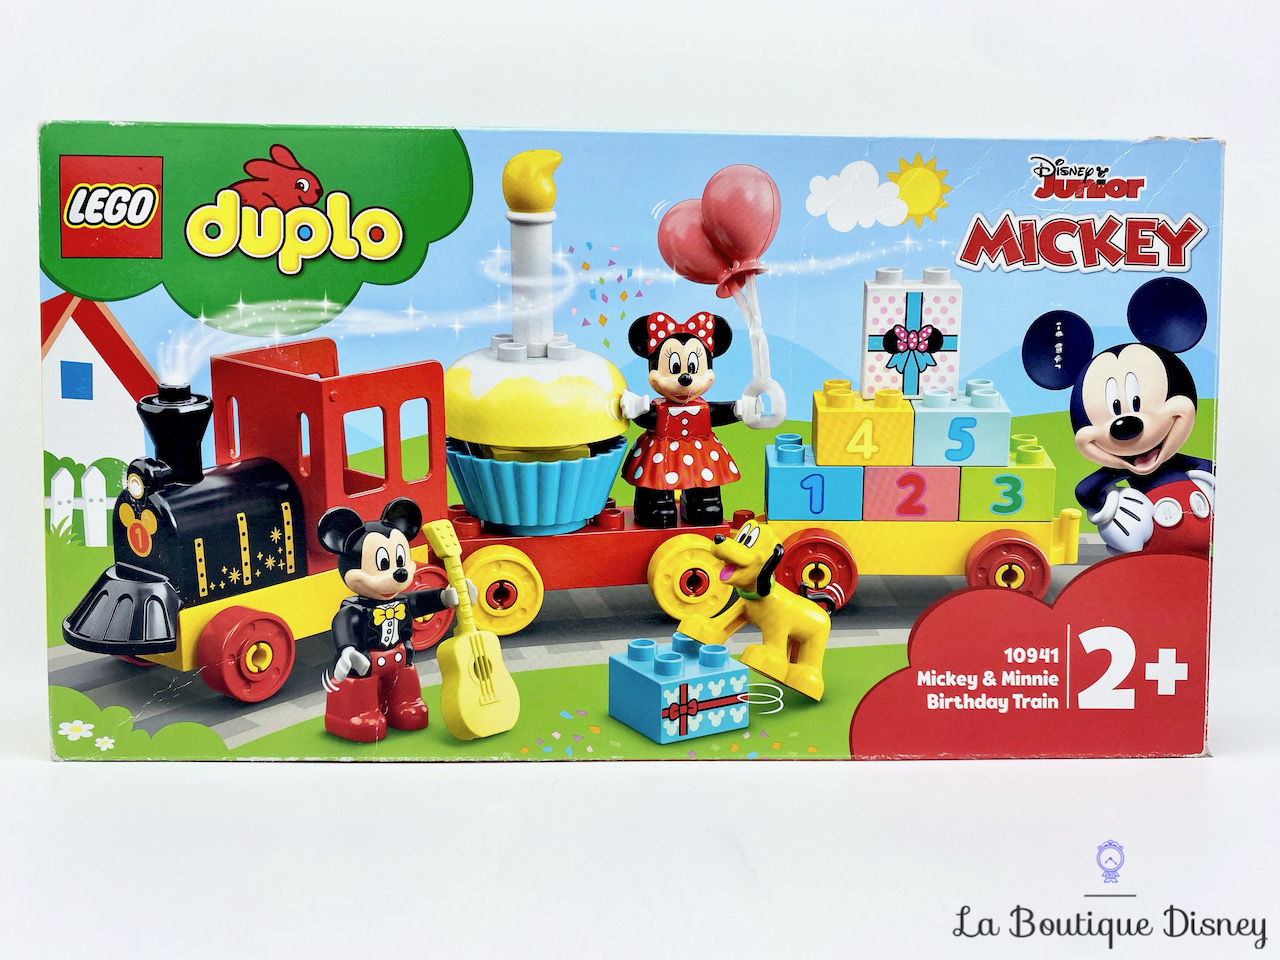 jouet-lego-duplo-10941-le-train-anniversaire-mickey-minnie-disney-2